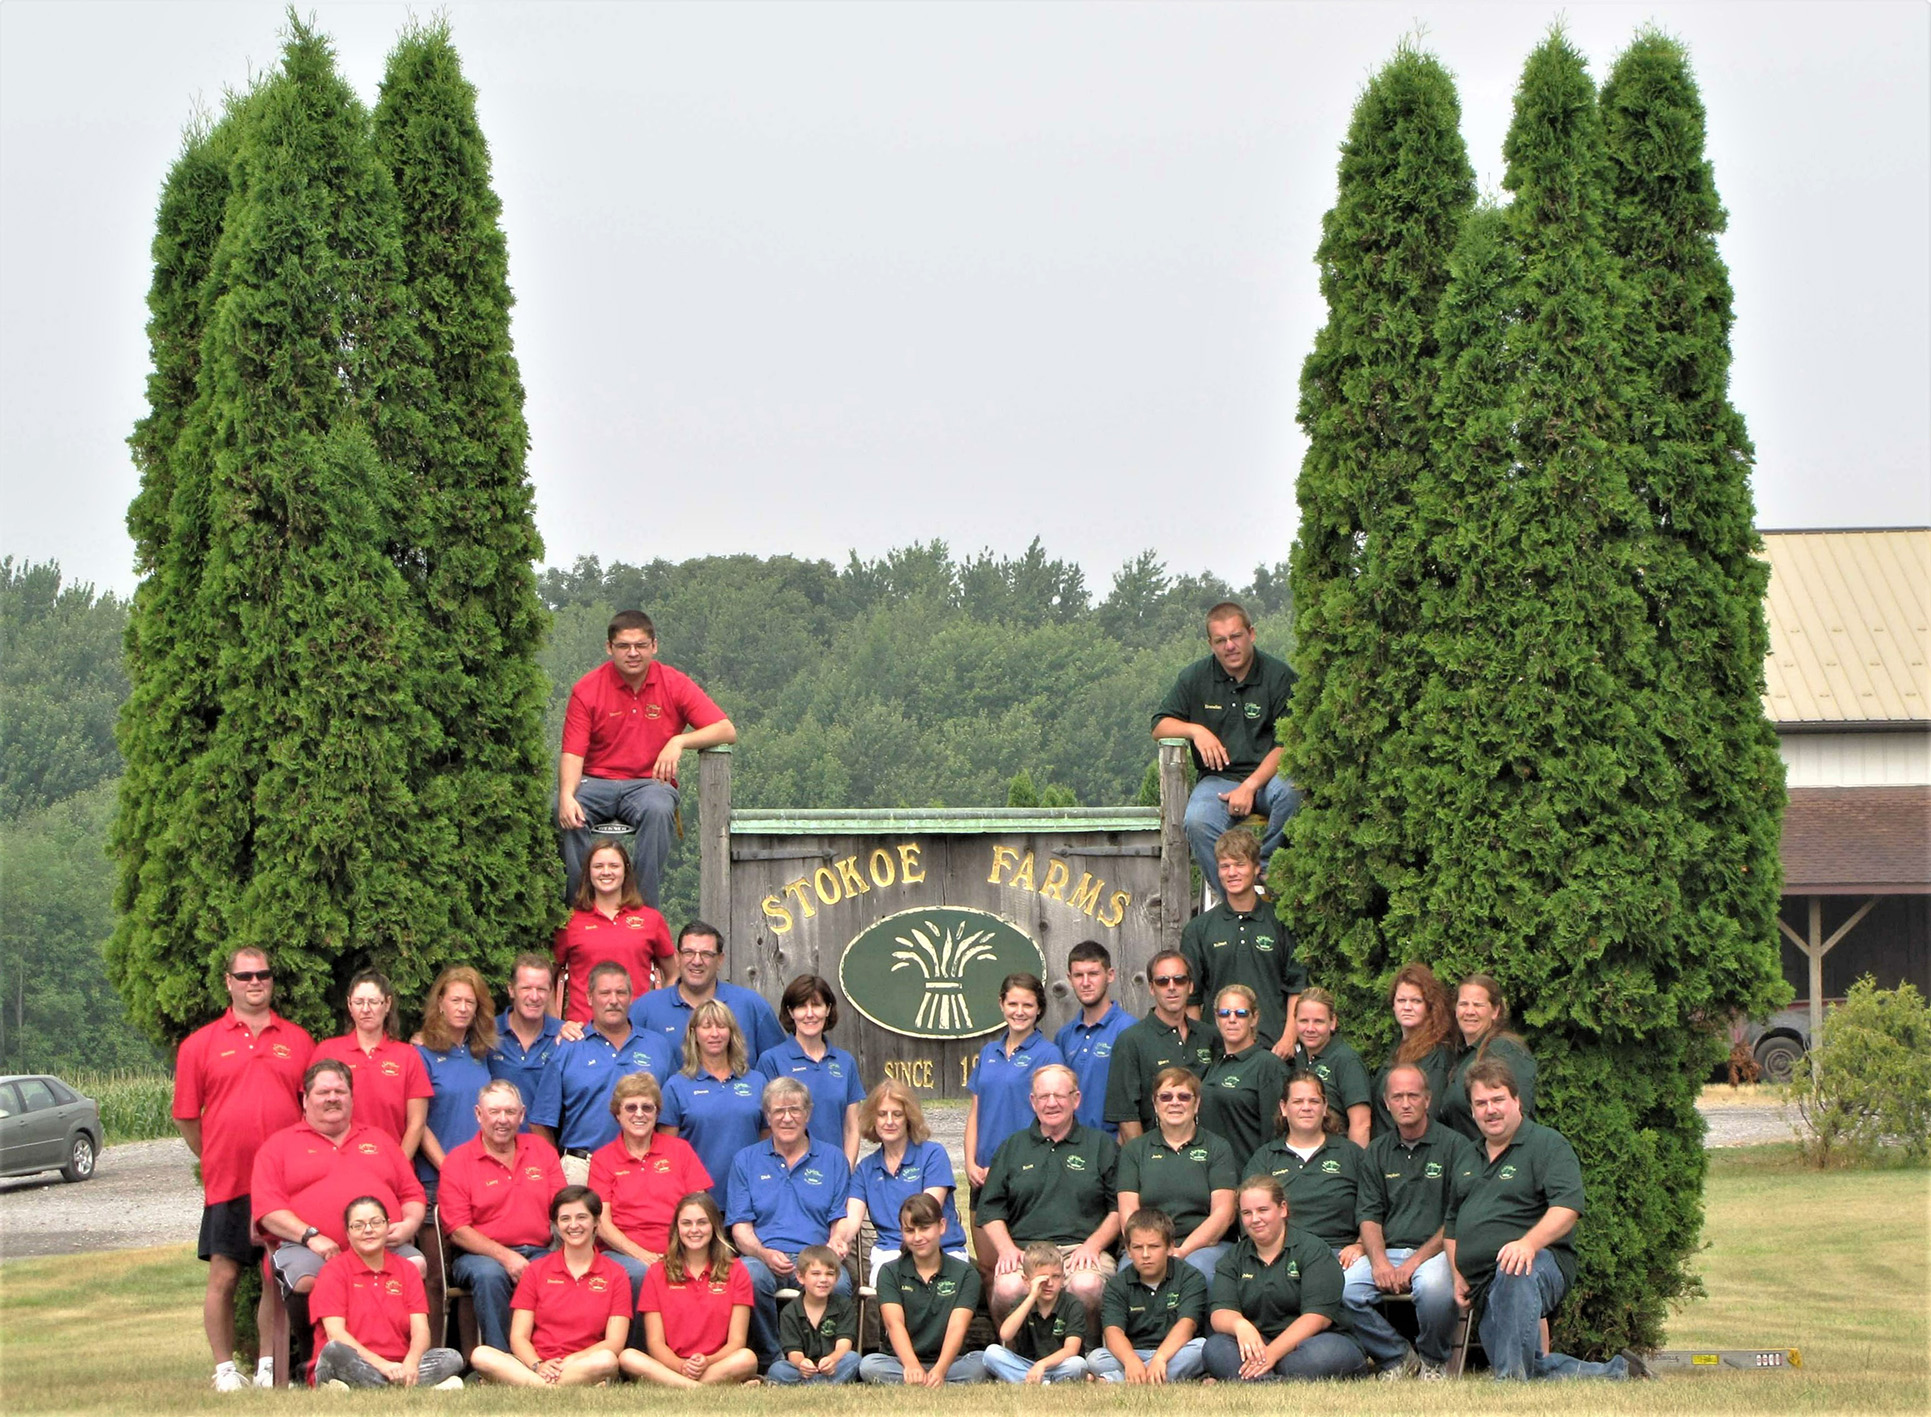 Group of Stokoe Farm employees